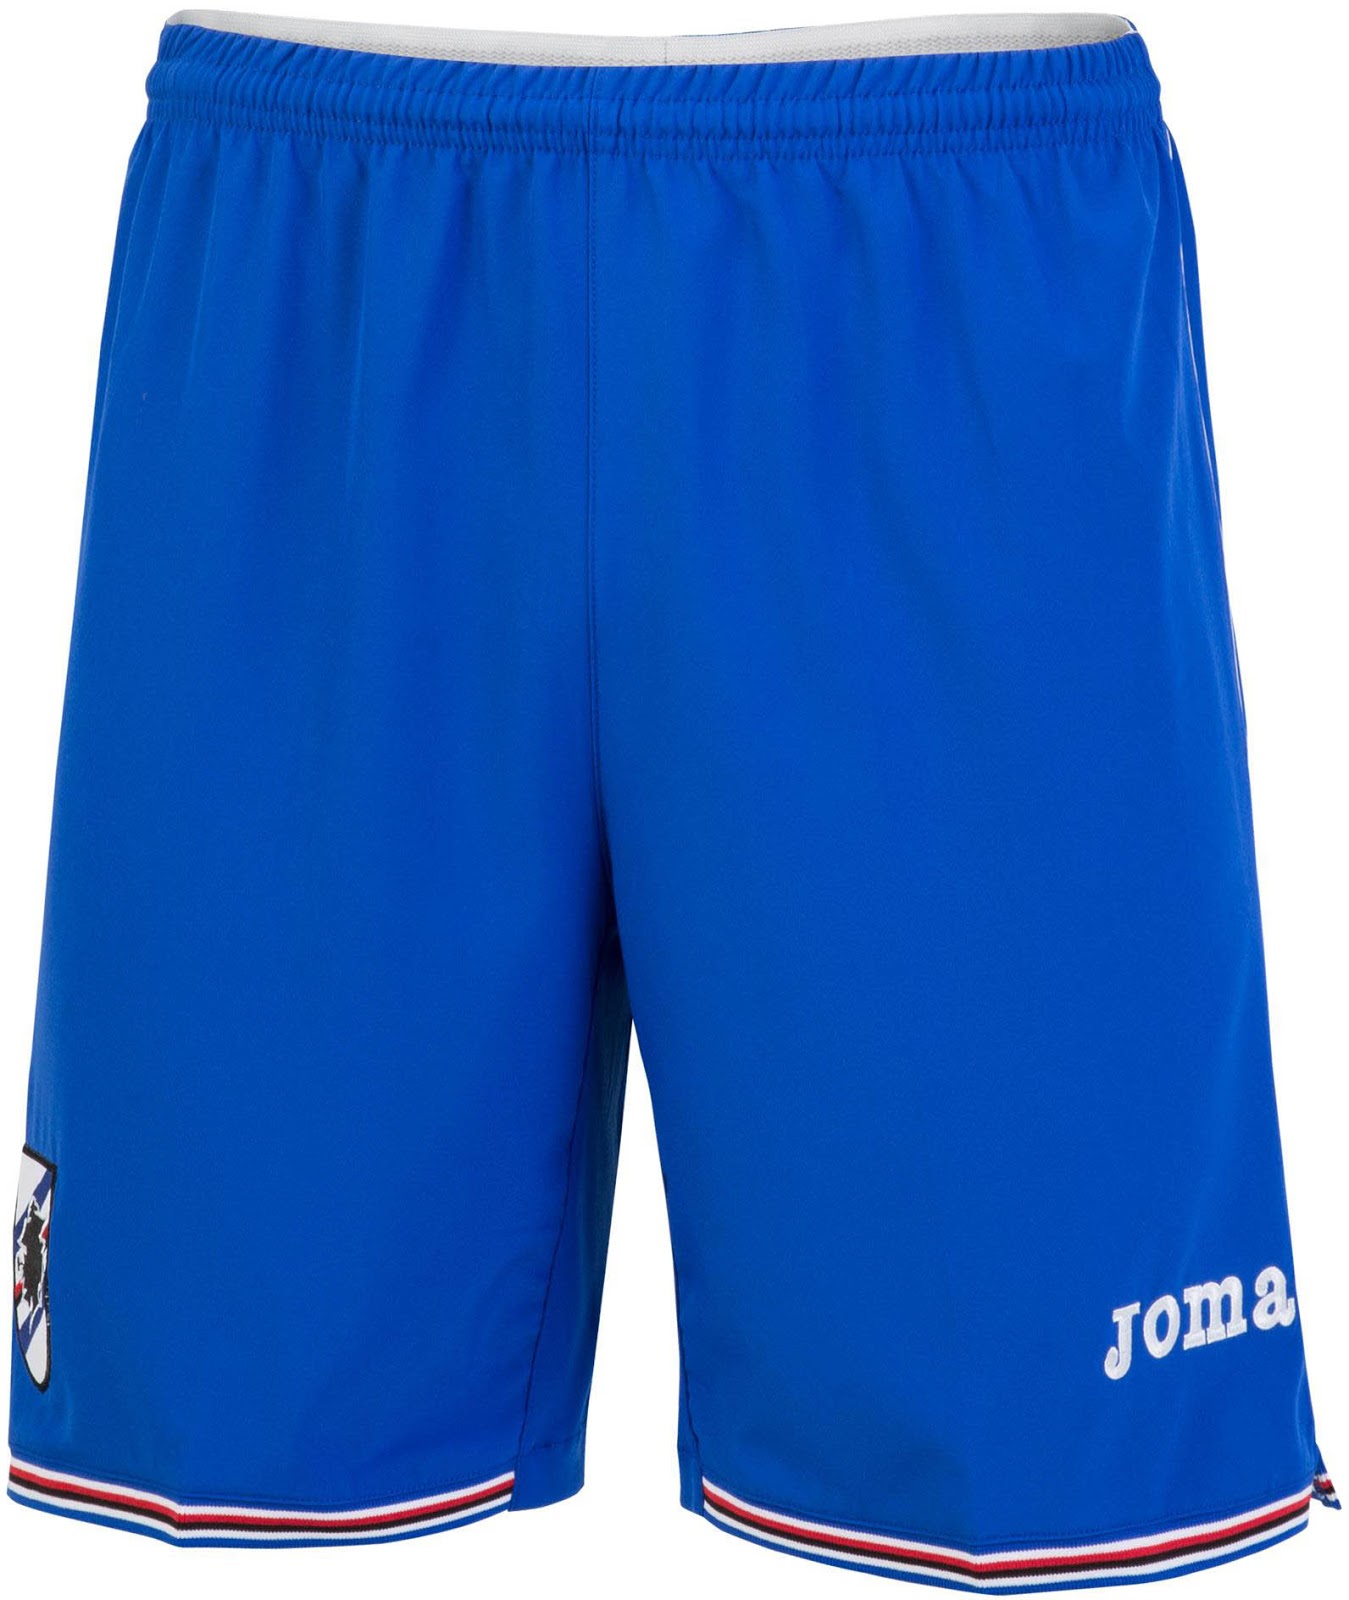 sampdoria-16-17-kits-away-shorts